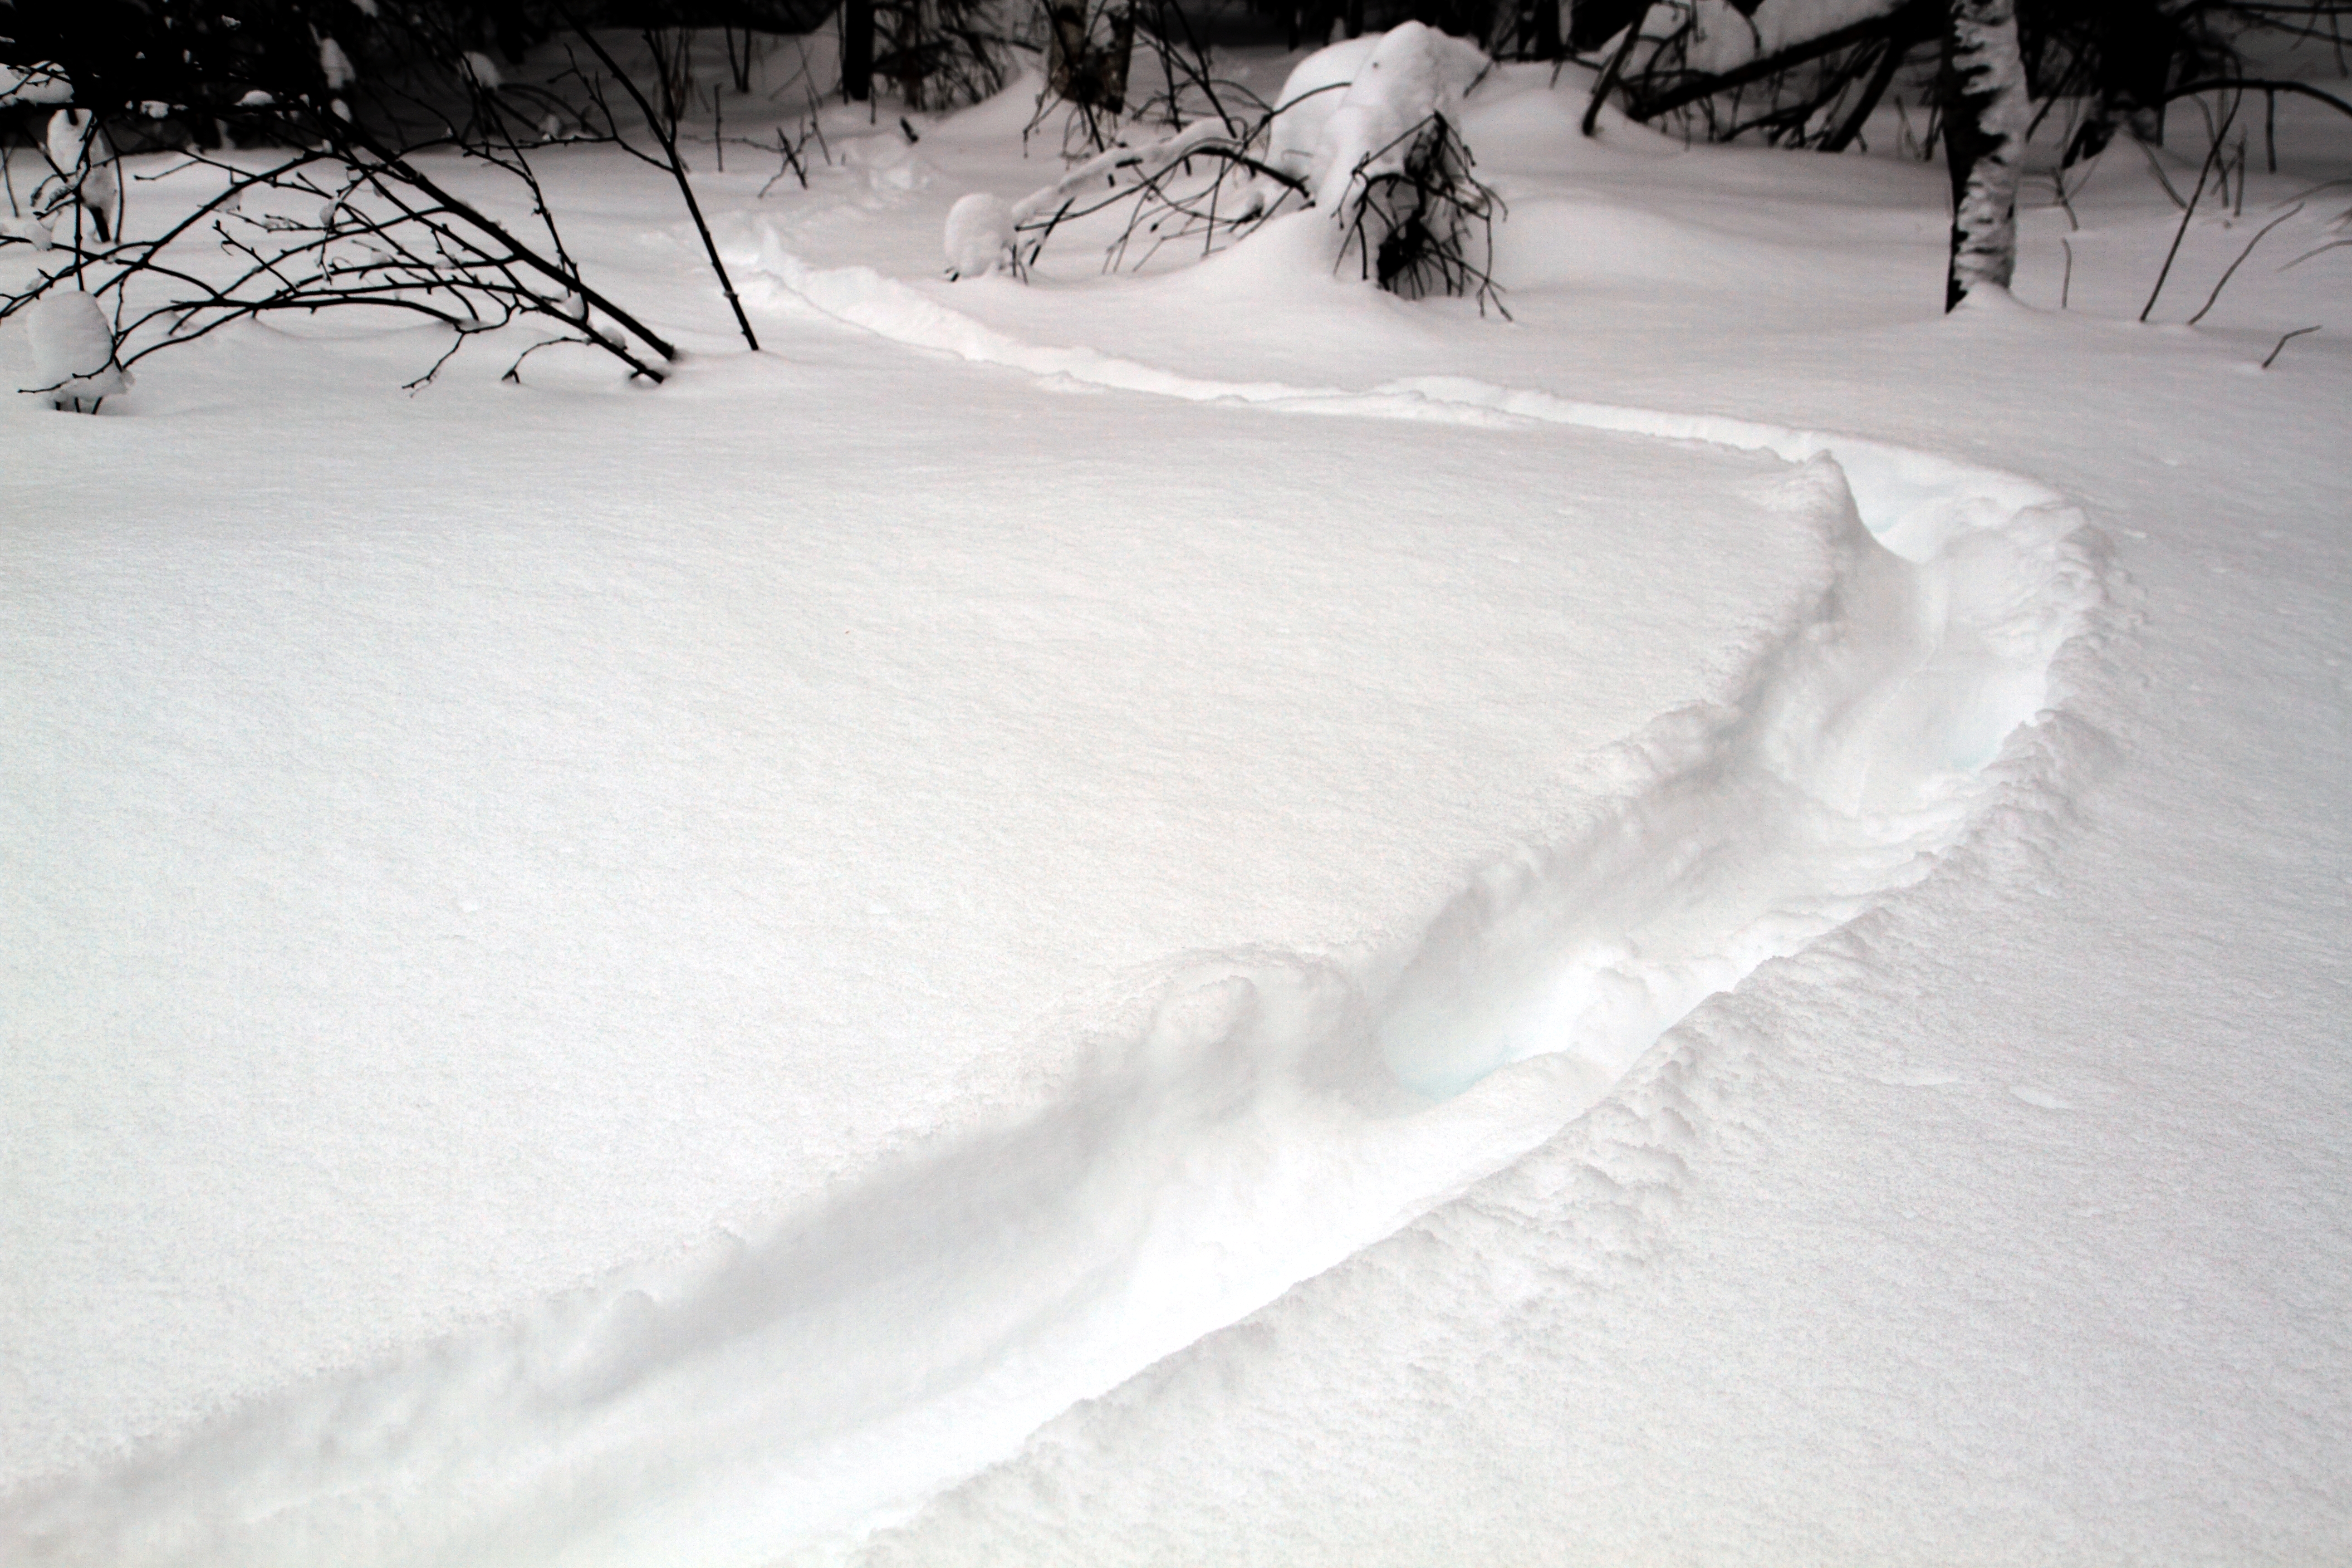 File:Lontra canadensis snow tracks 1.jpg - Wikimedia Commons